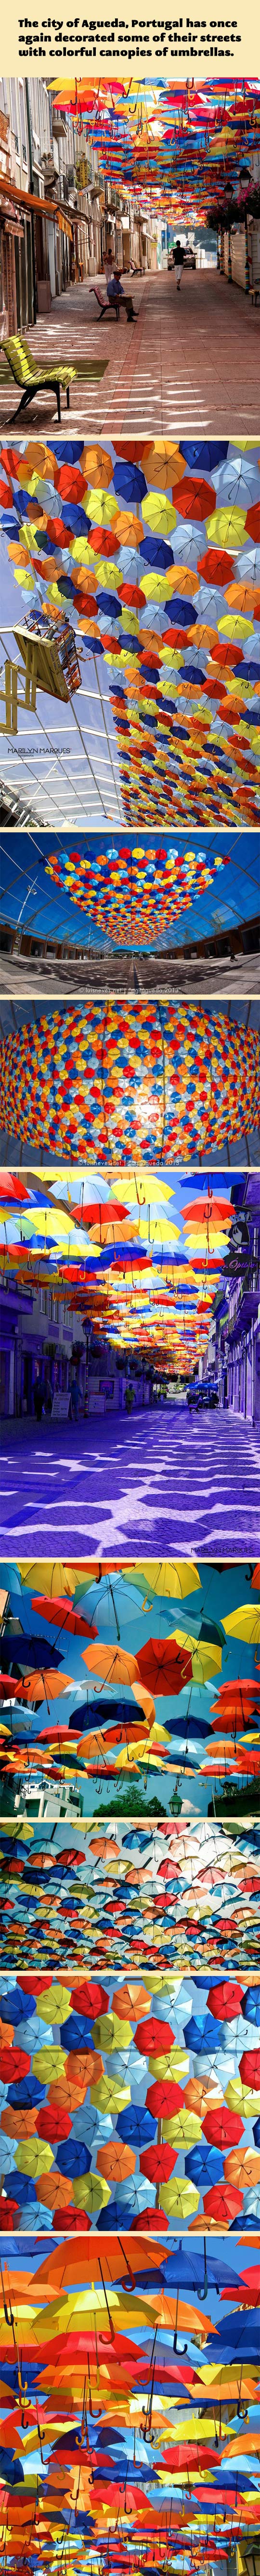 portugal, art, street, umbrellas, canopy